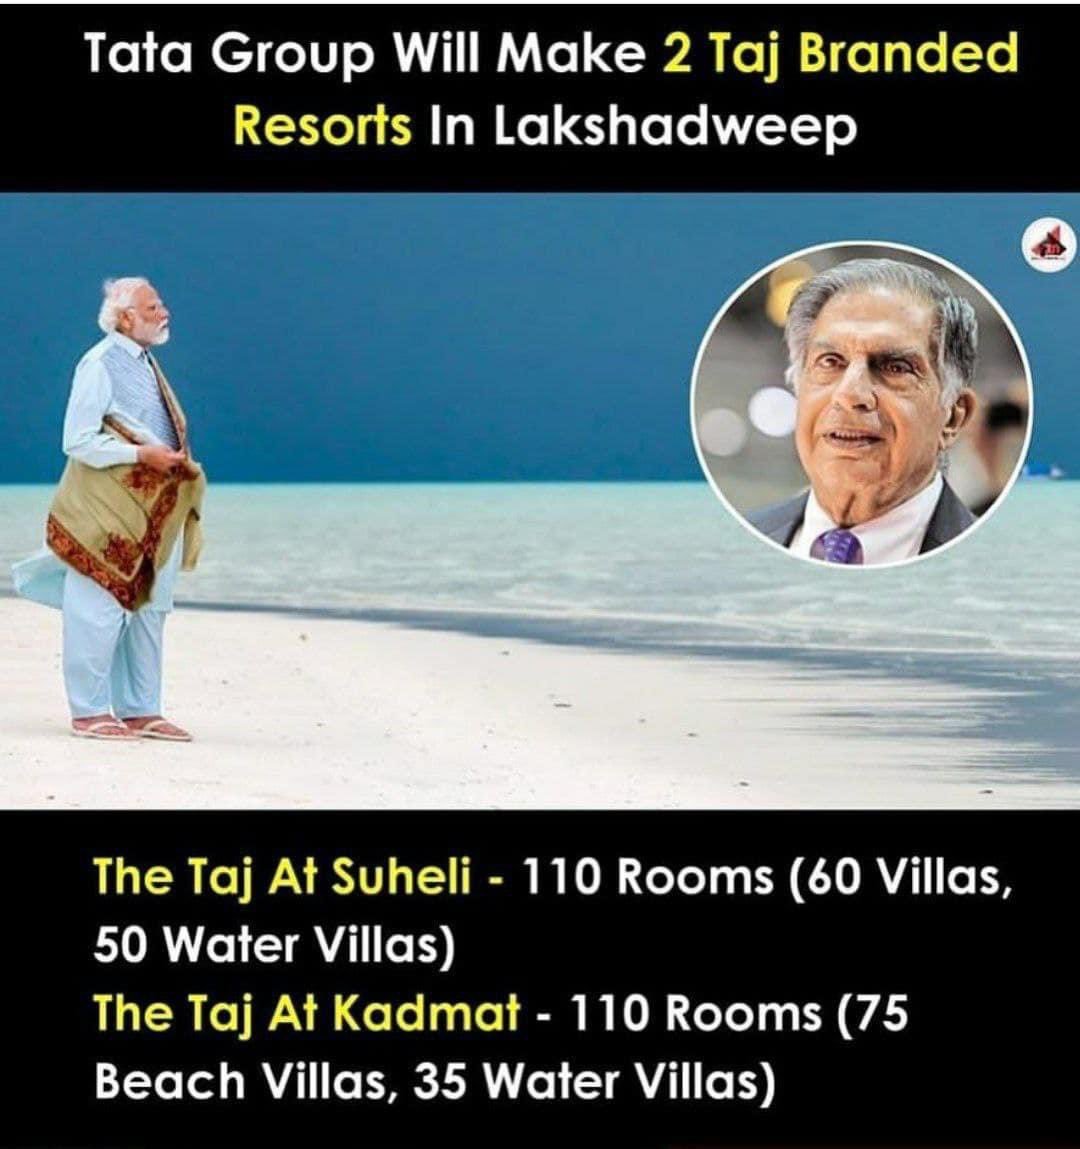 TATA Group will Make 2 Taj Branded Resorts in Lakshadweep